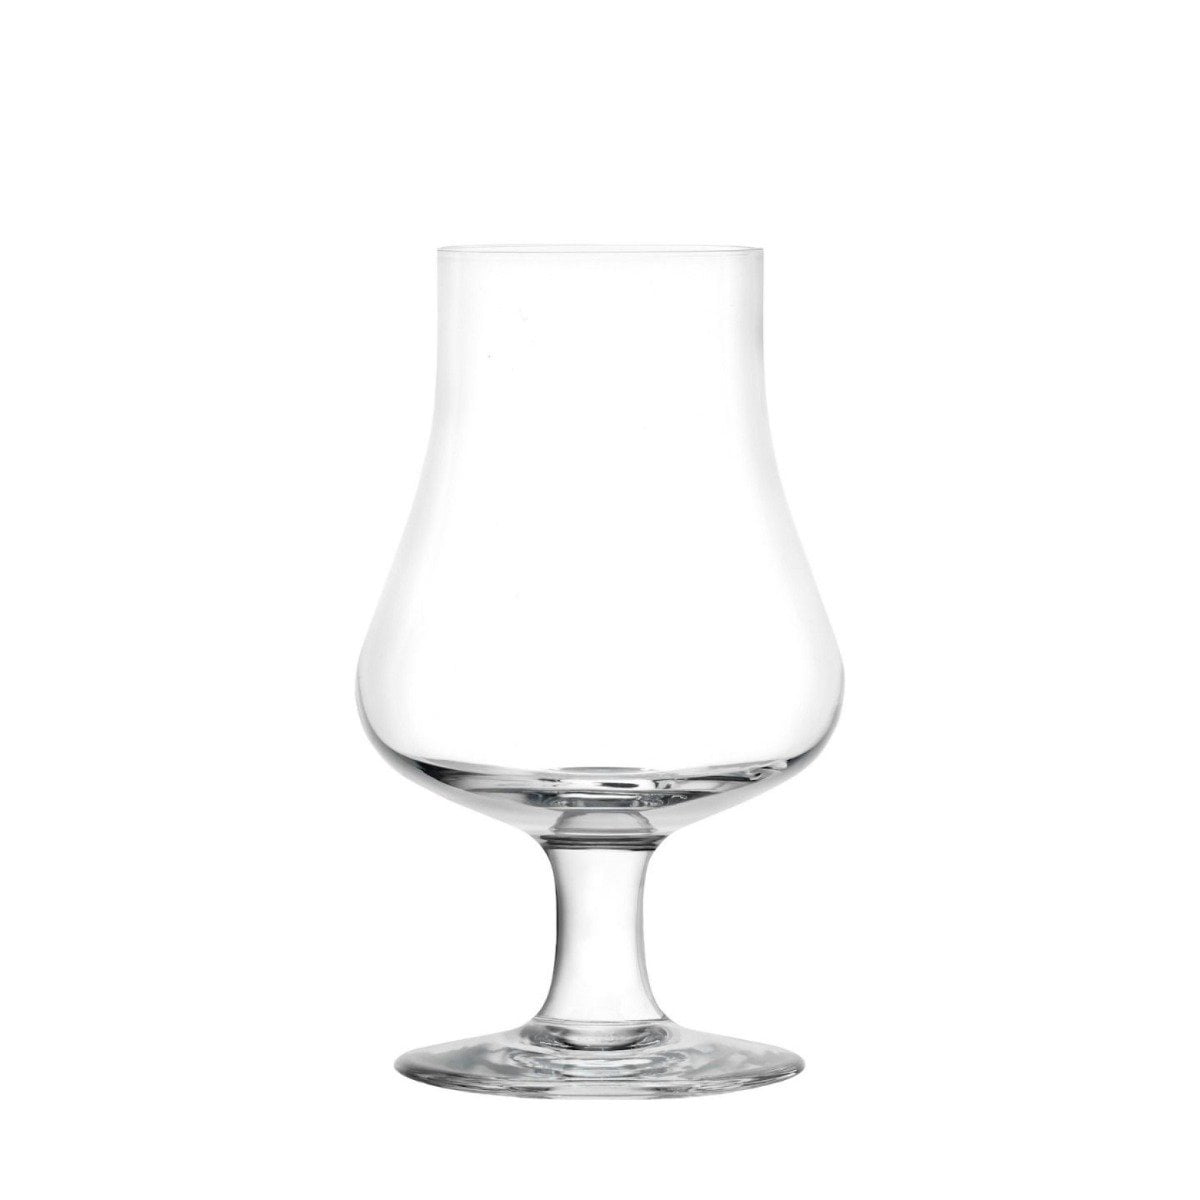 6pk Stolzle 15.75oz German Crystal Wine Glasses Stemless Wine Glasses White Wine 